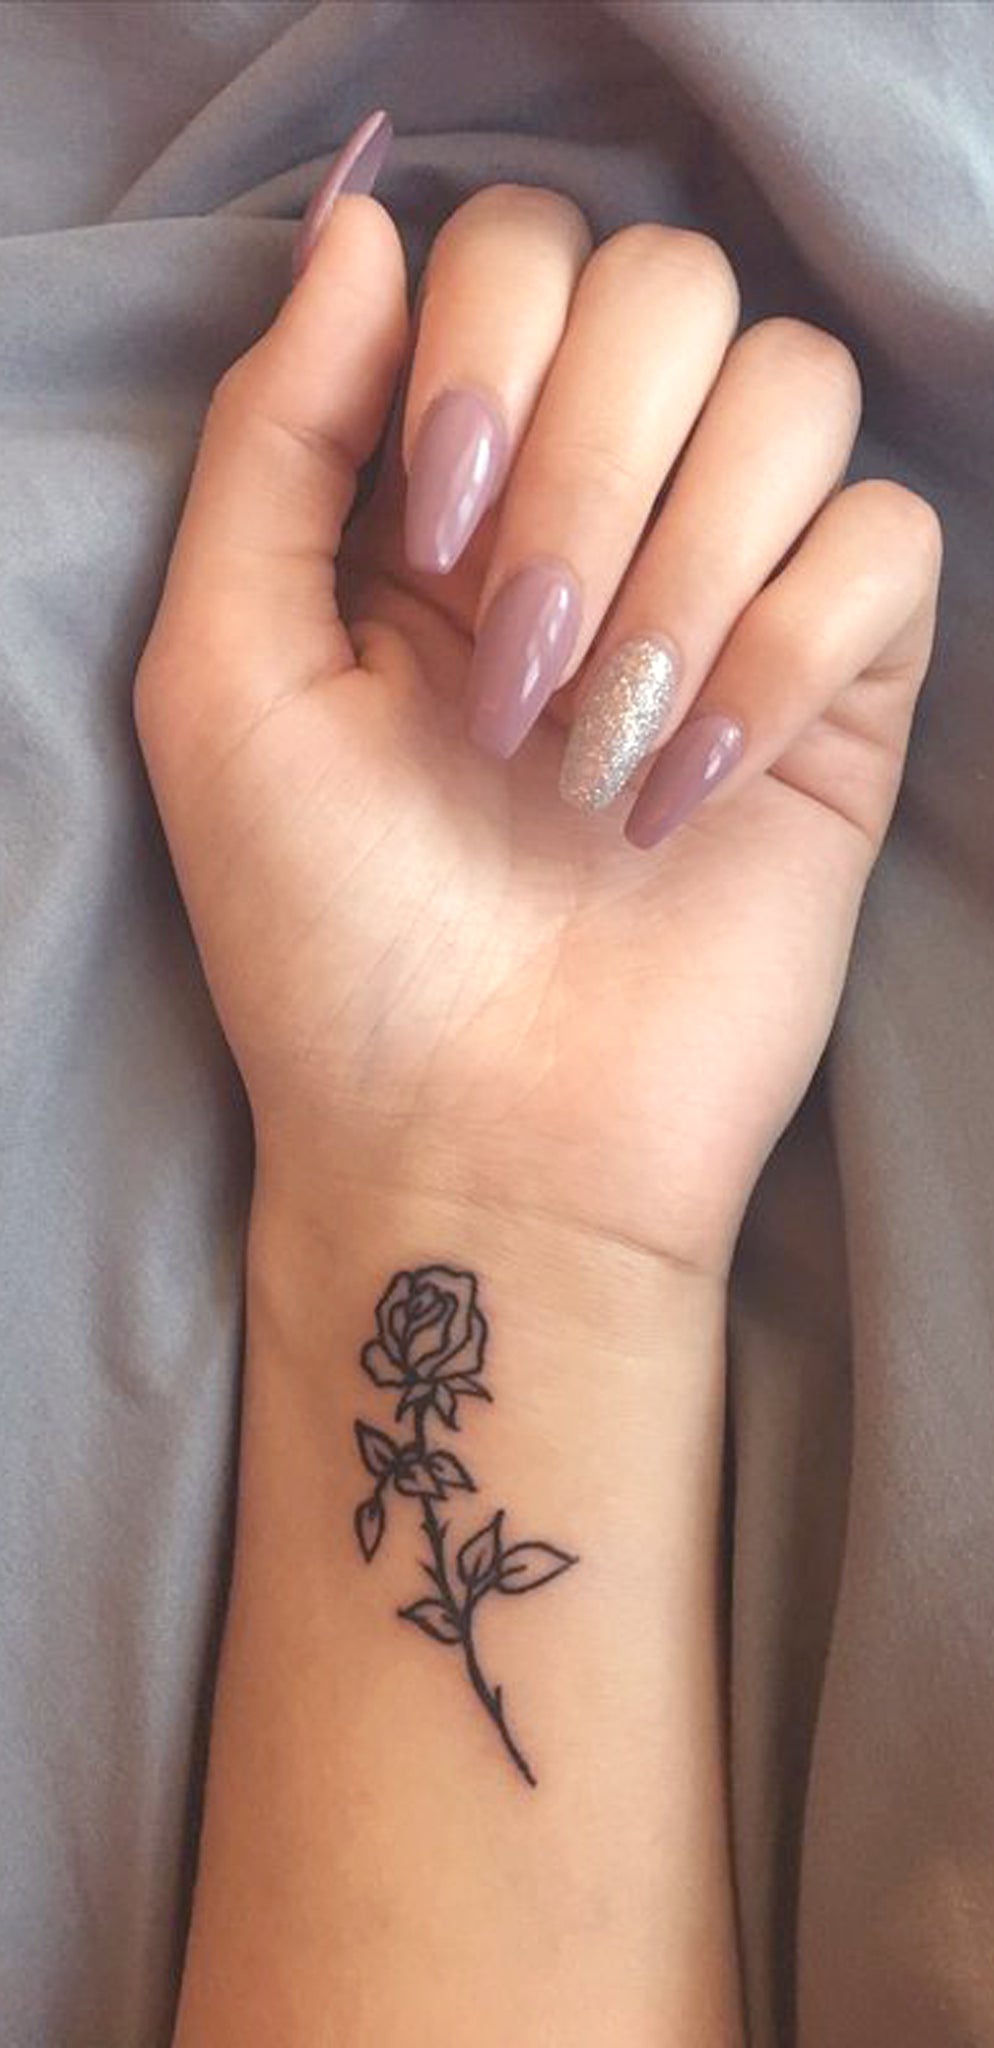 Small Rose Wrist Tattoo Ideas for Women - Minimal Flower Arm Tatouage - Ideas Del Tatuaje Inked - Coffin Nail Ideas Art - www.MyBodiArt.com